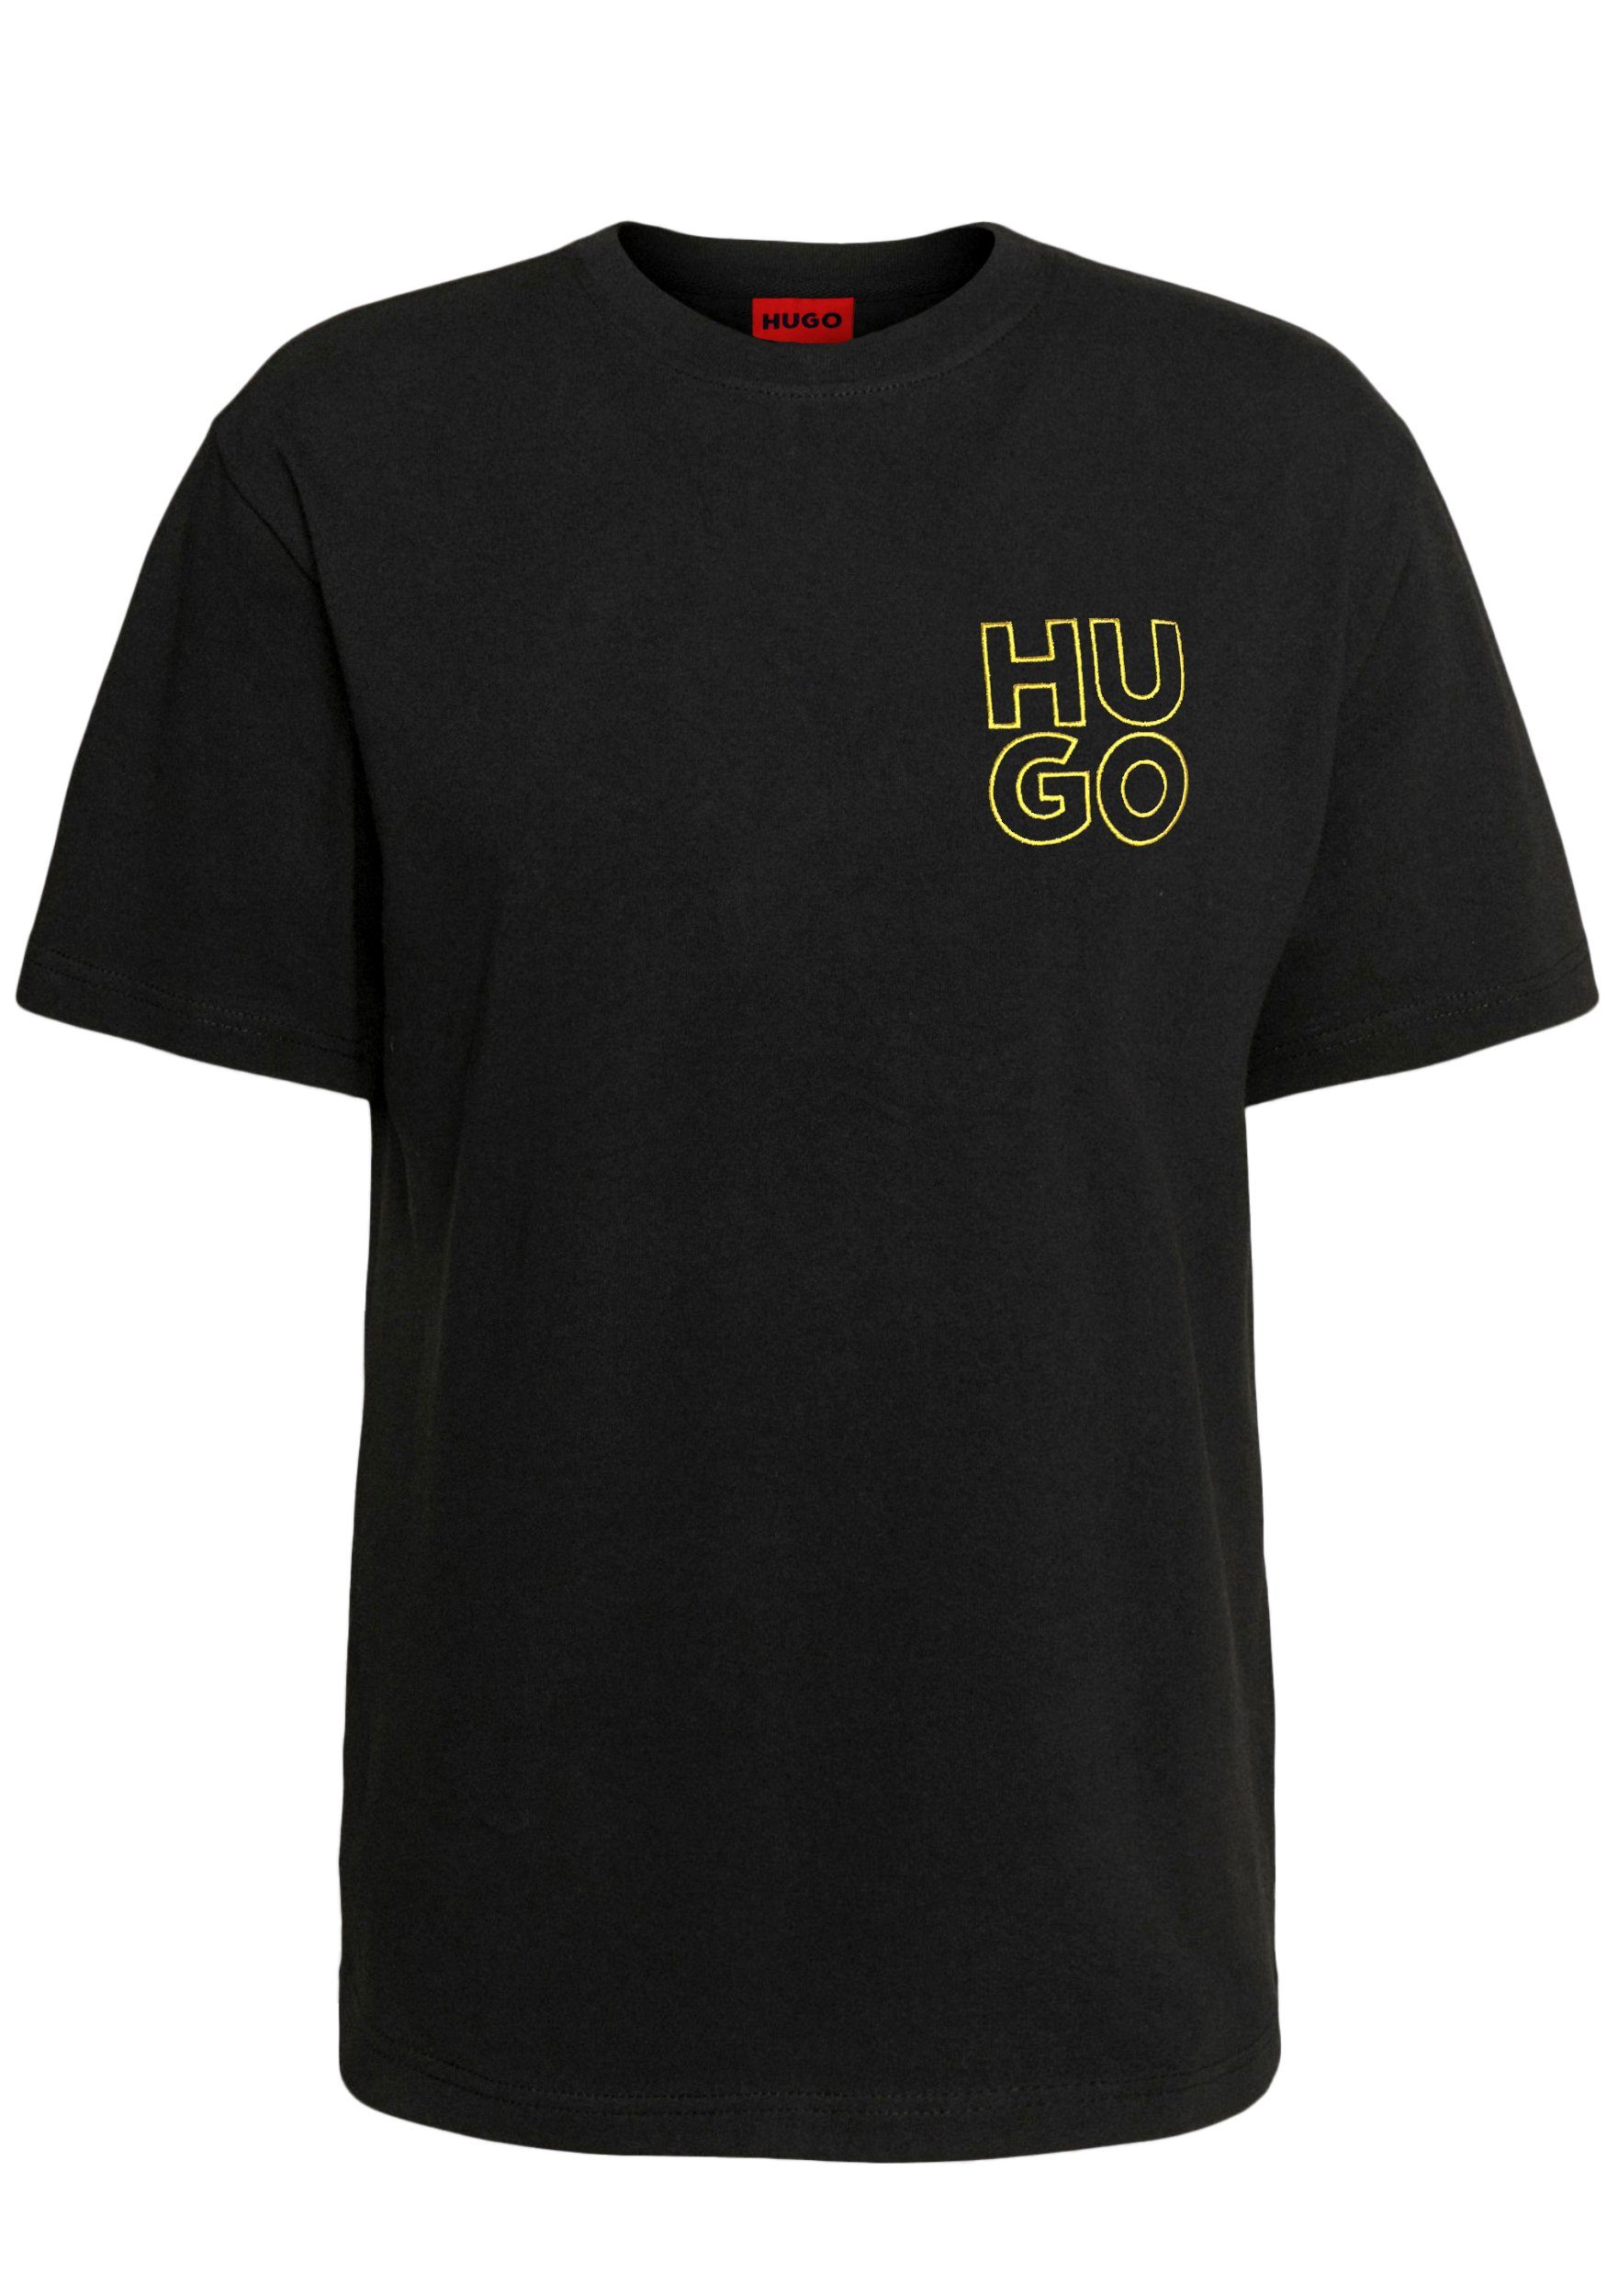 HUGO T-Shirt Hugo Boss Shirt Daiman Label stick auf der Brust